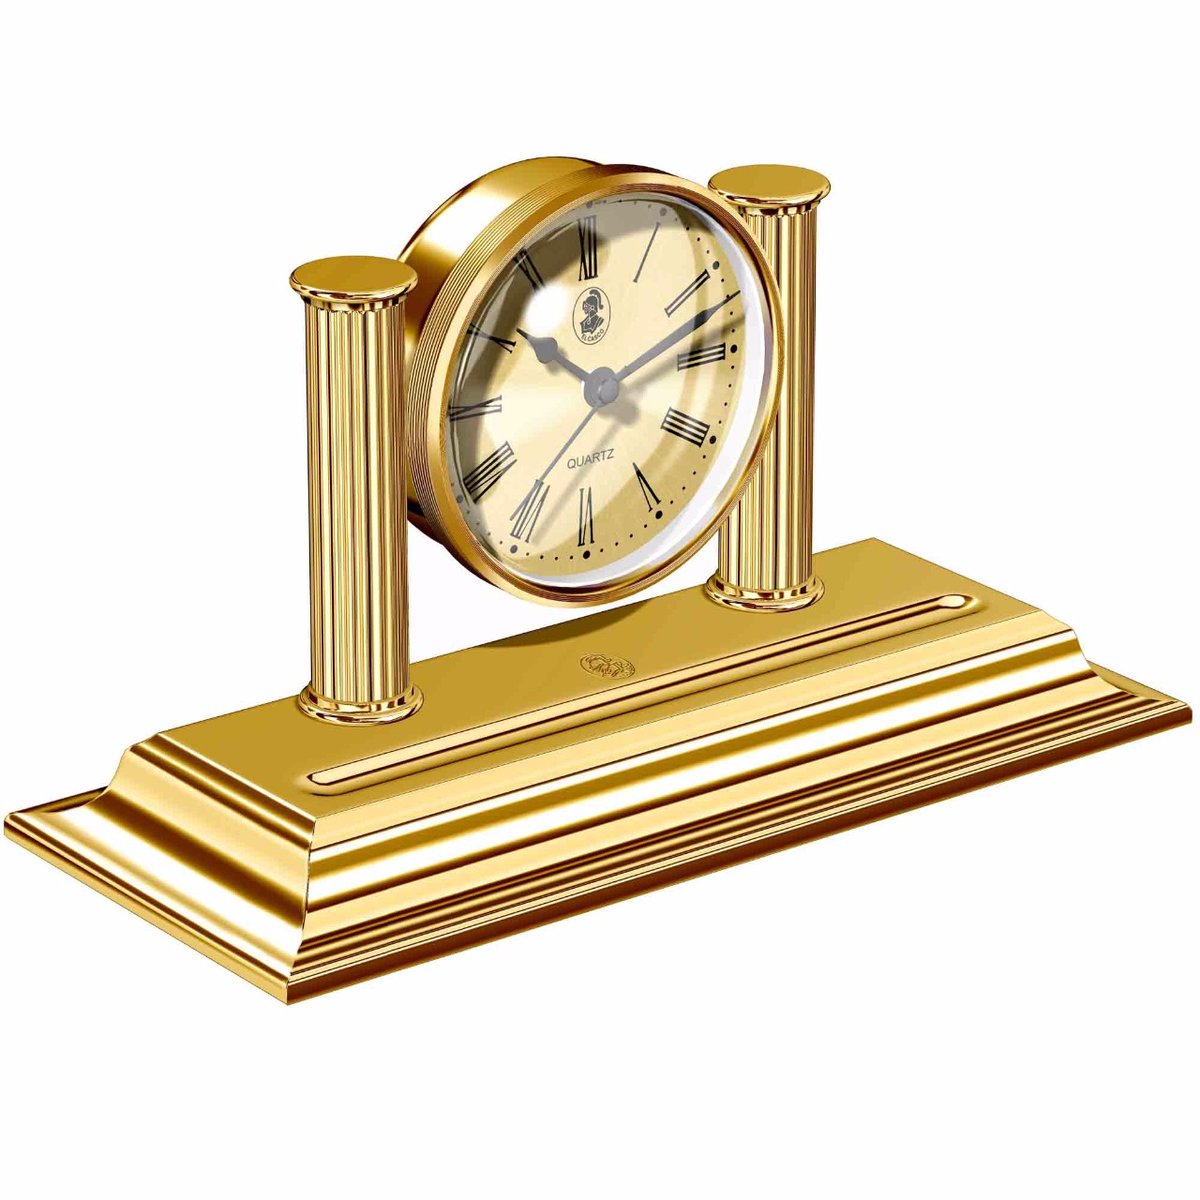 Leronza On Twitter 24k Gold Desk Clock Pen Holder Luxury Desk